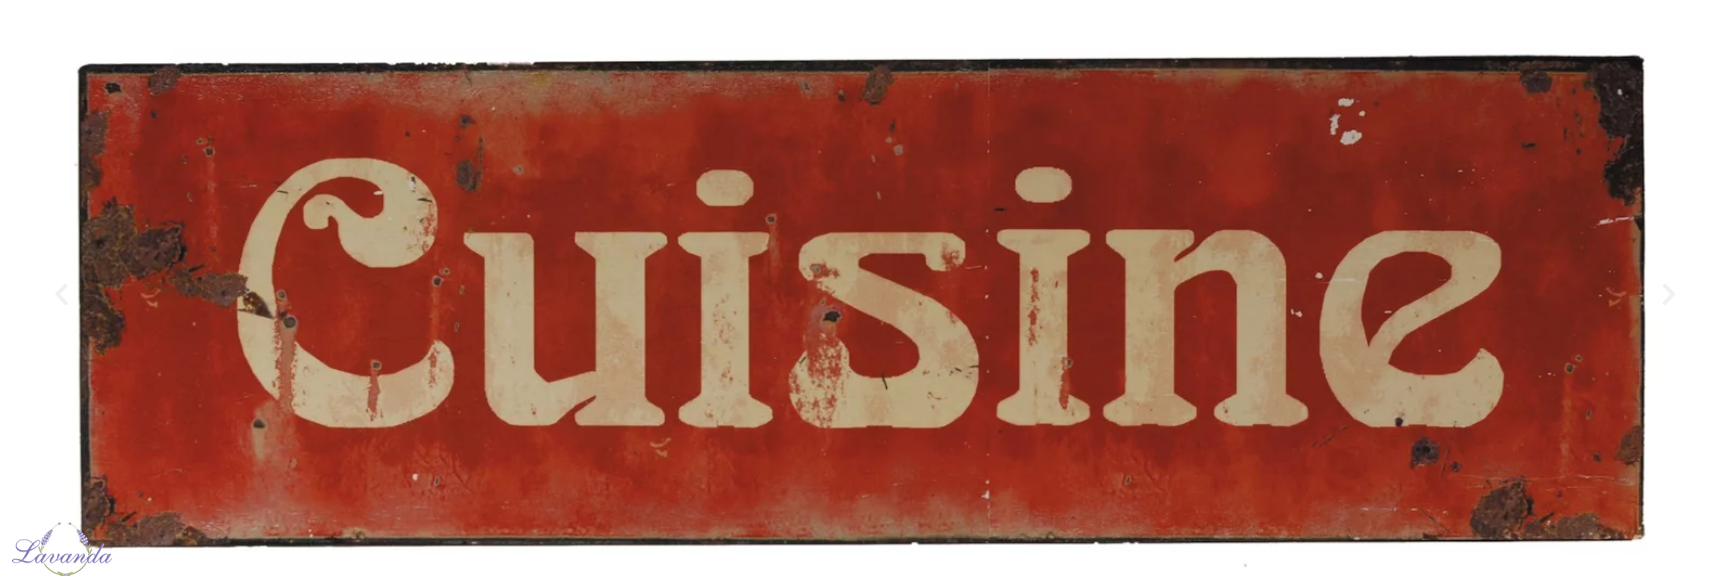 Vintage kovová tabuľka "Cuisene "  - Kuchyňa